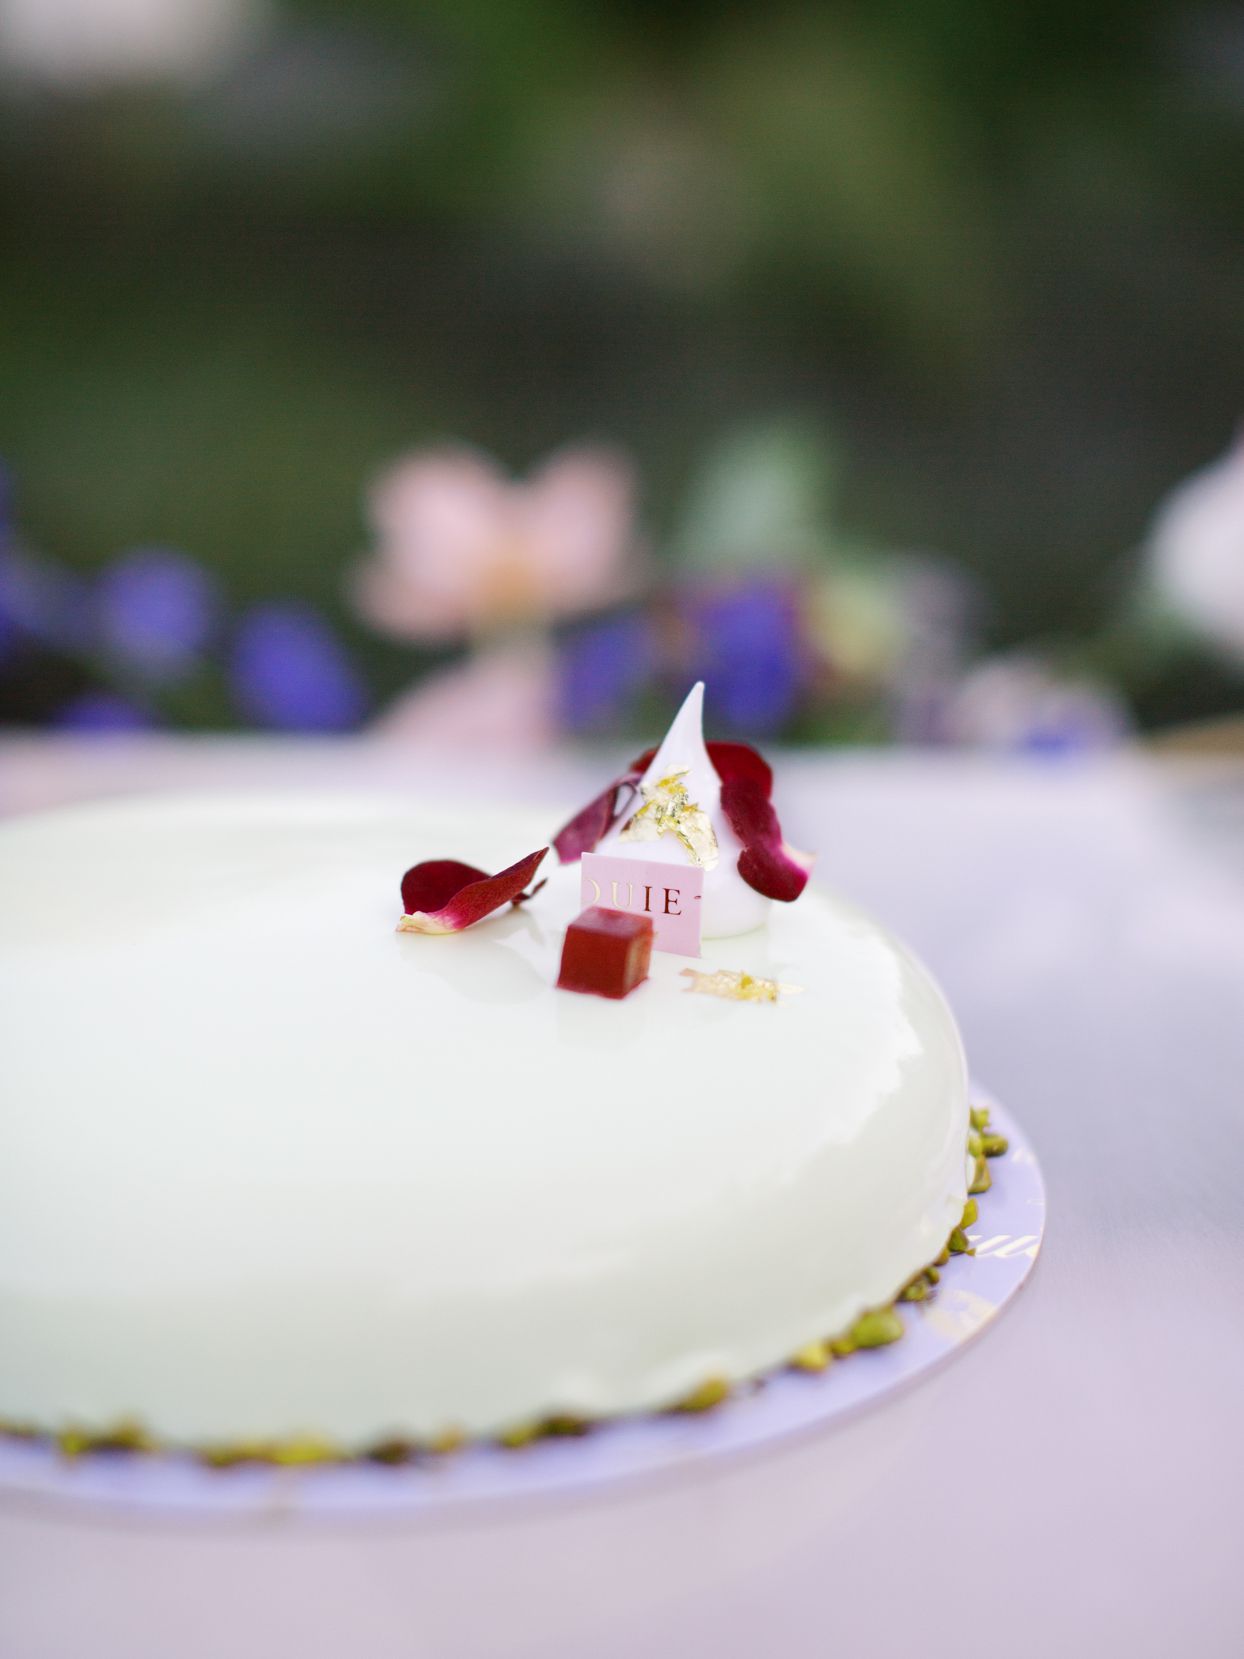 pistachio joconde cake with almond mousse, pistachio mousse, and cherry marmalade for wedding reception